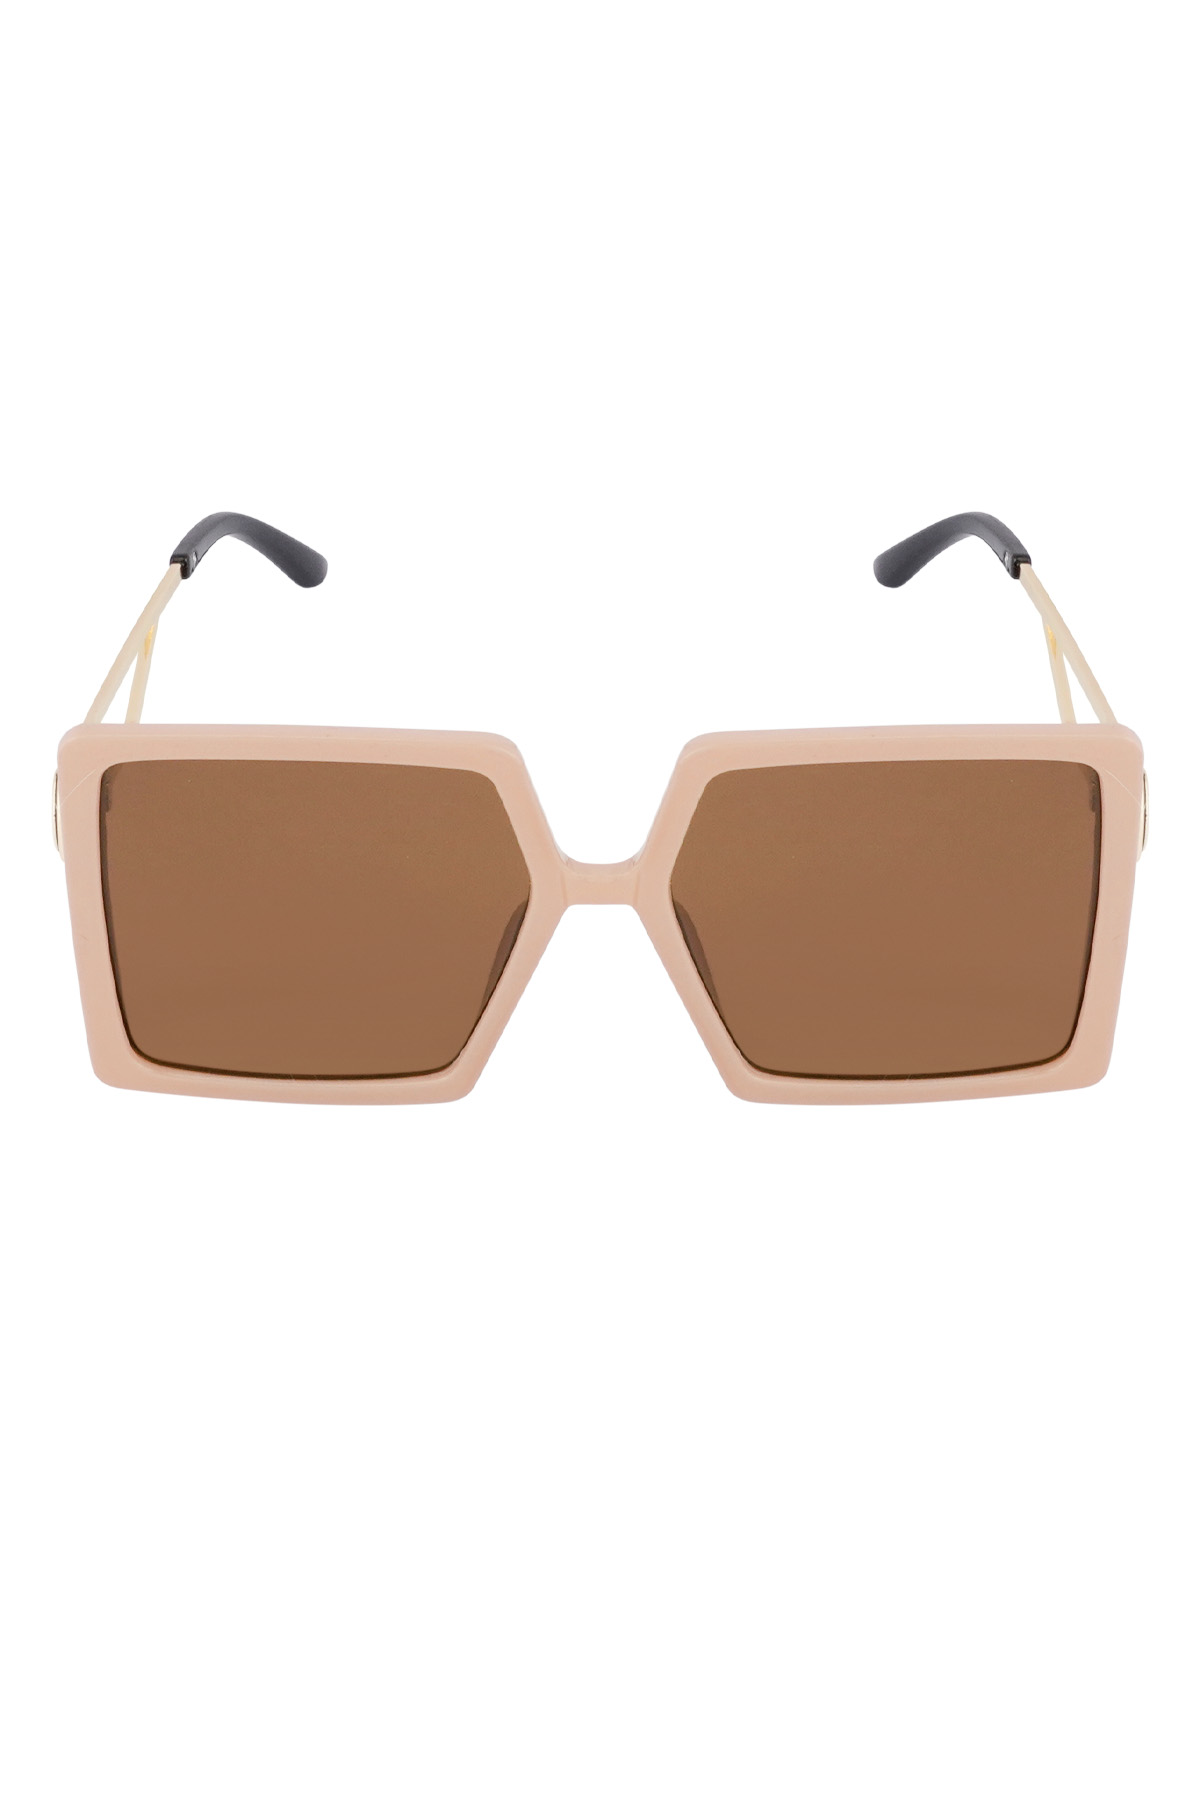 Summer statement sunglasses - beige  Picture4